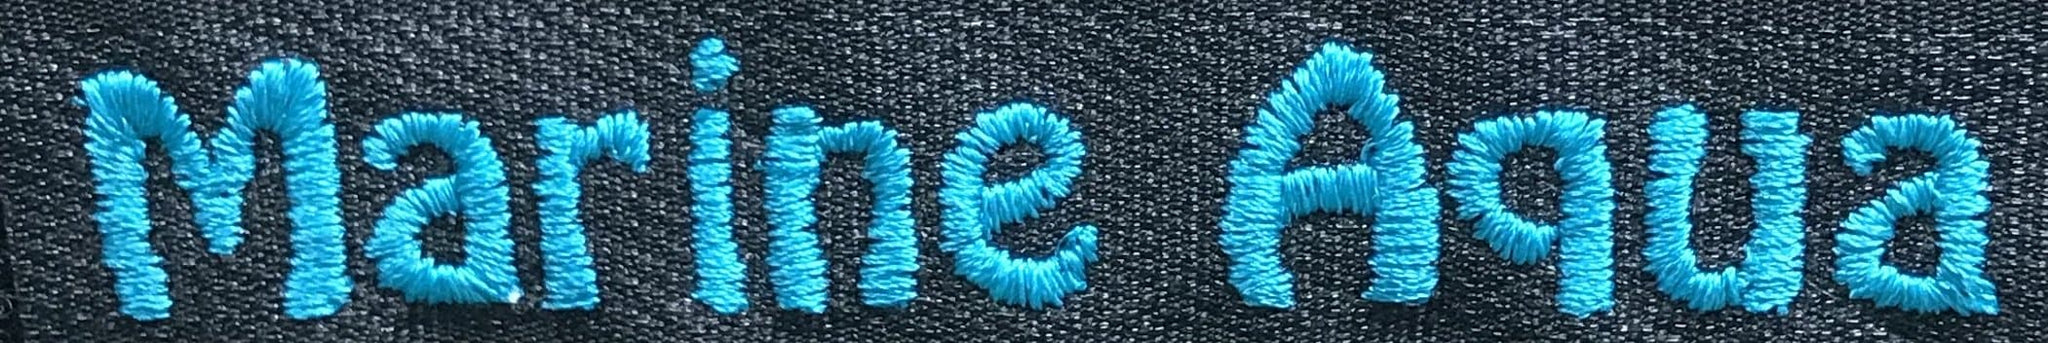 marine aqua embroidery example